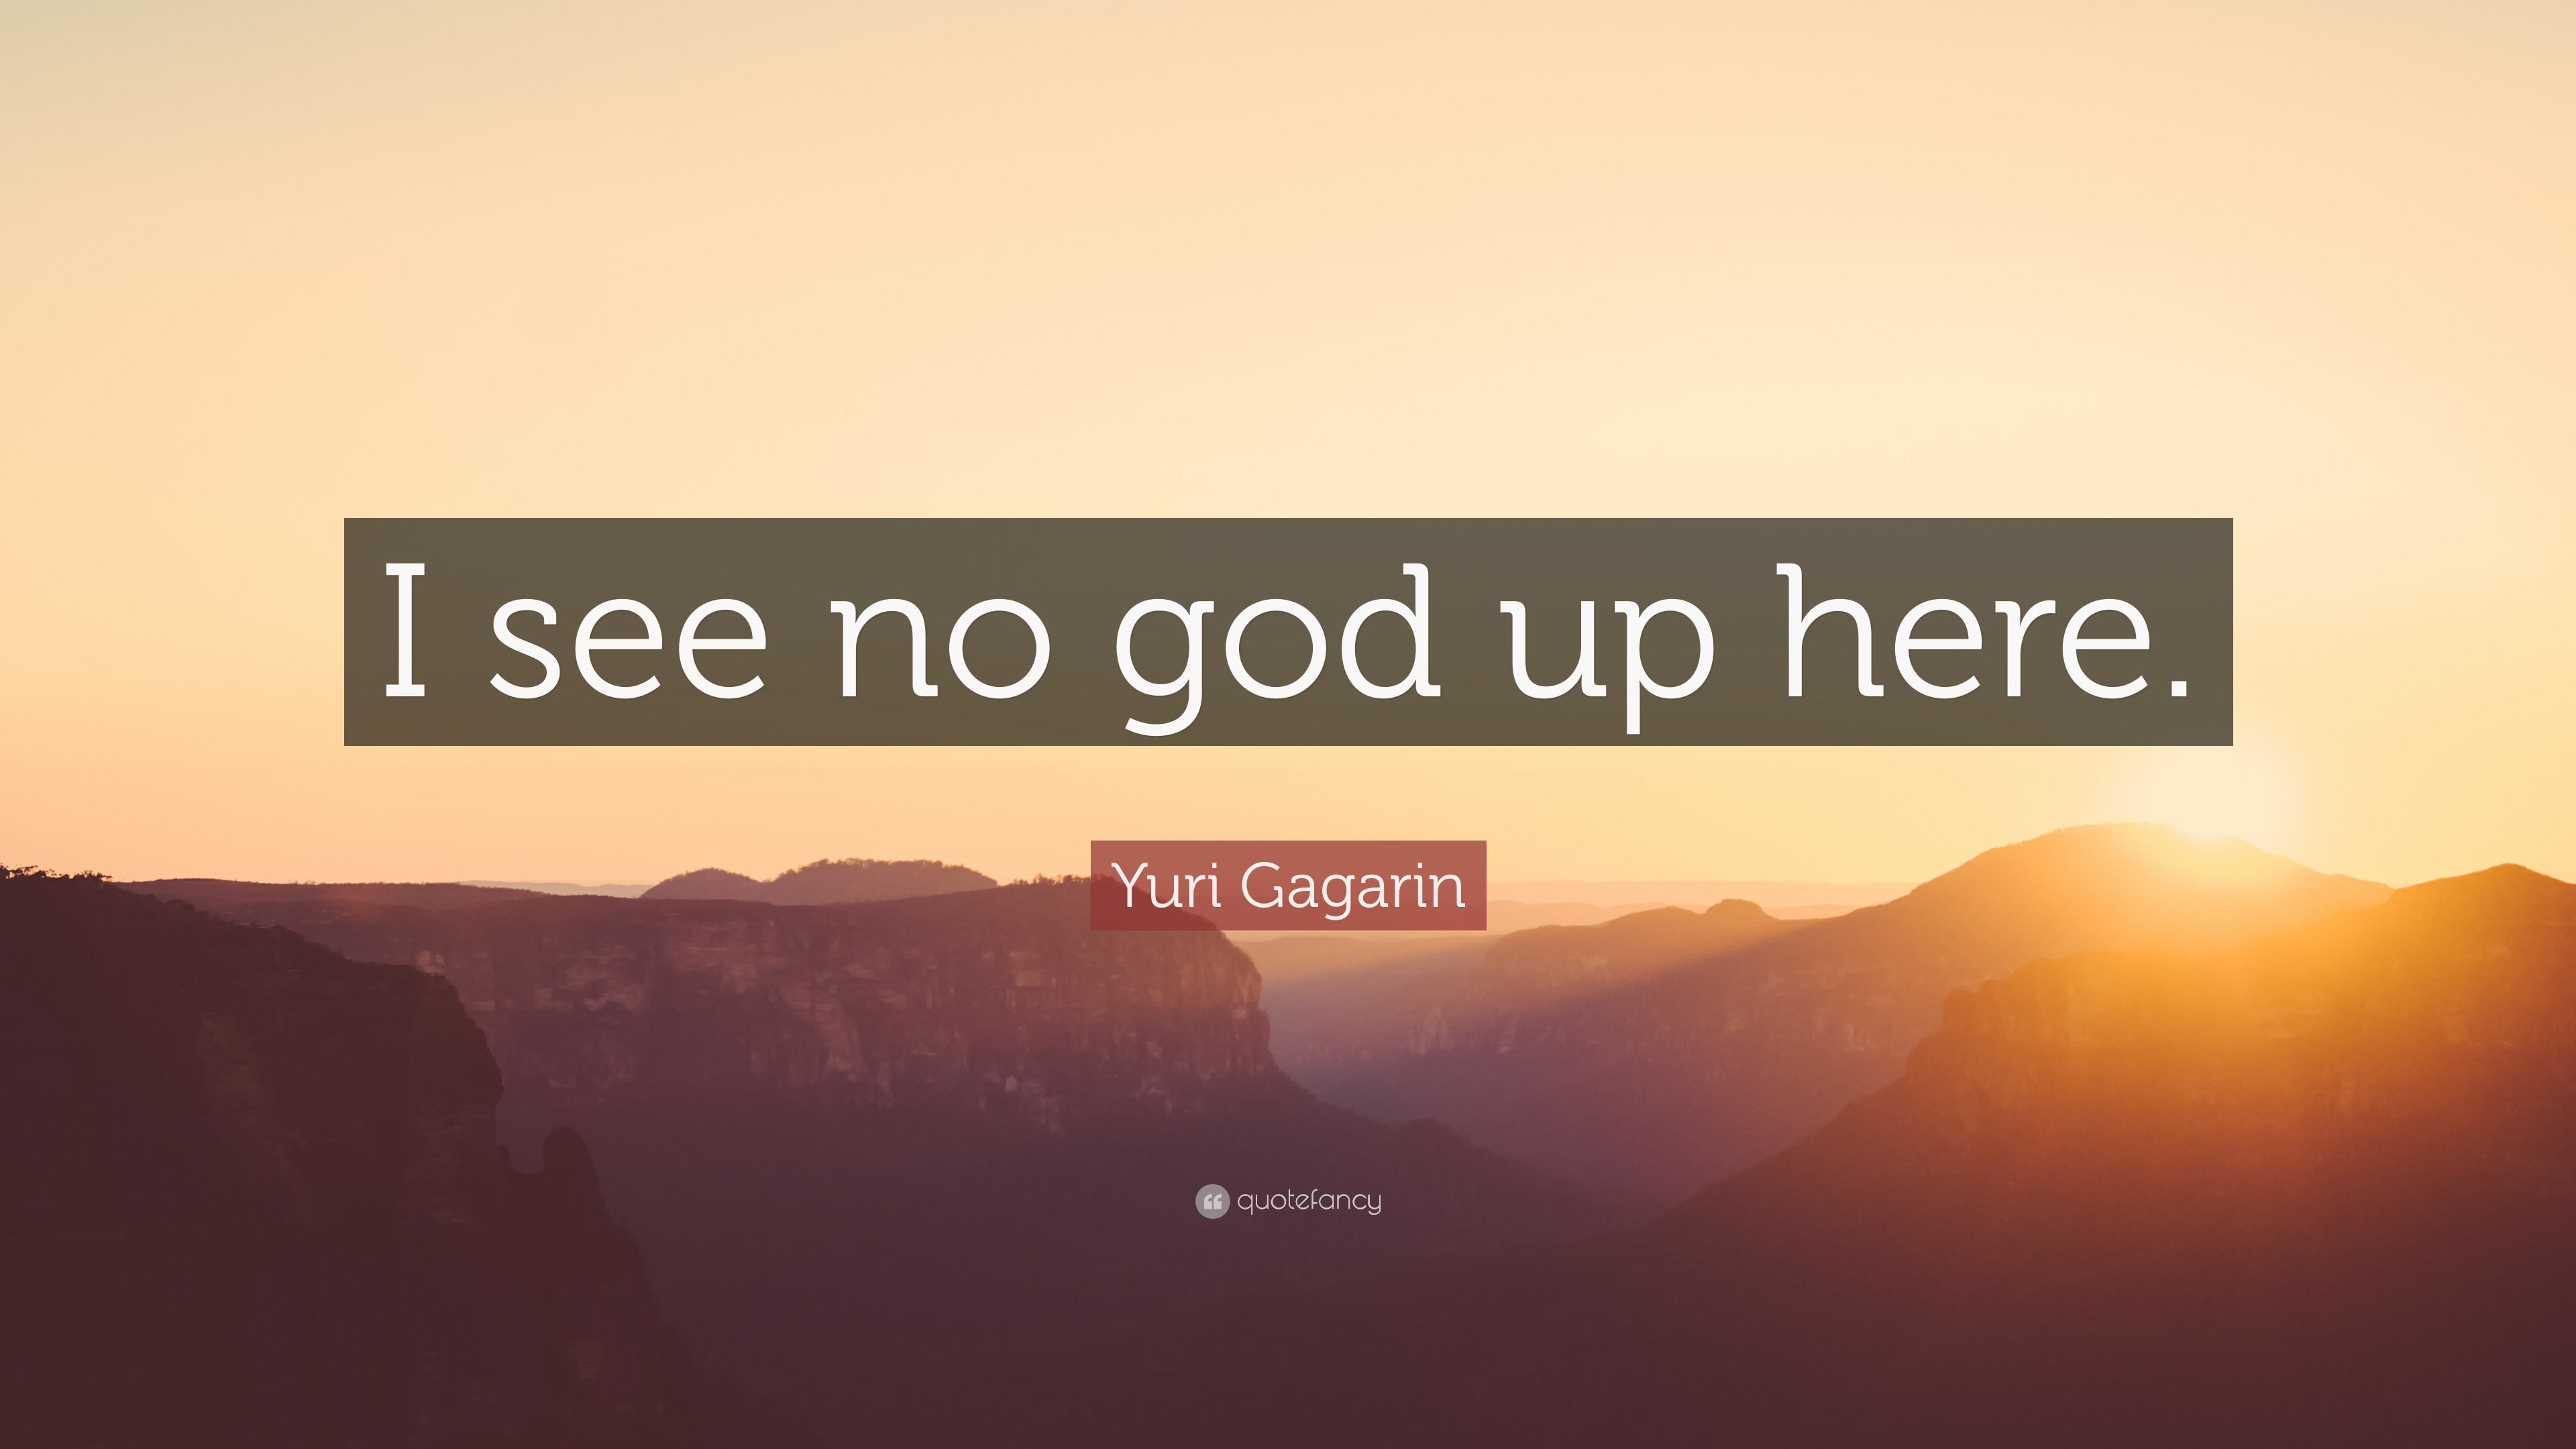 3840x2160 Yuri Gagarin Quote: “I see no god up here.”